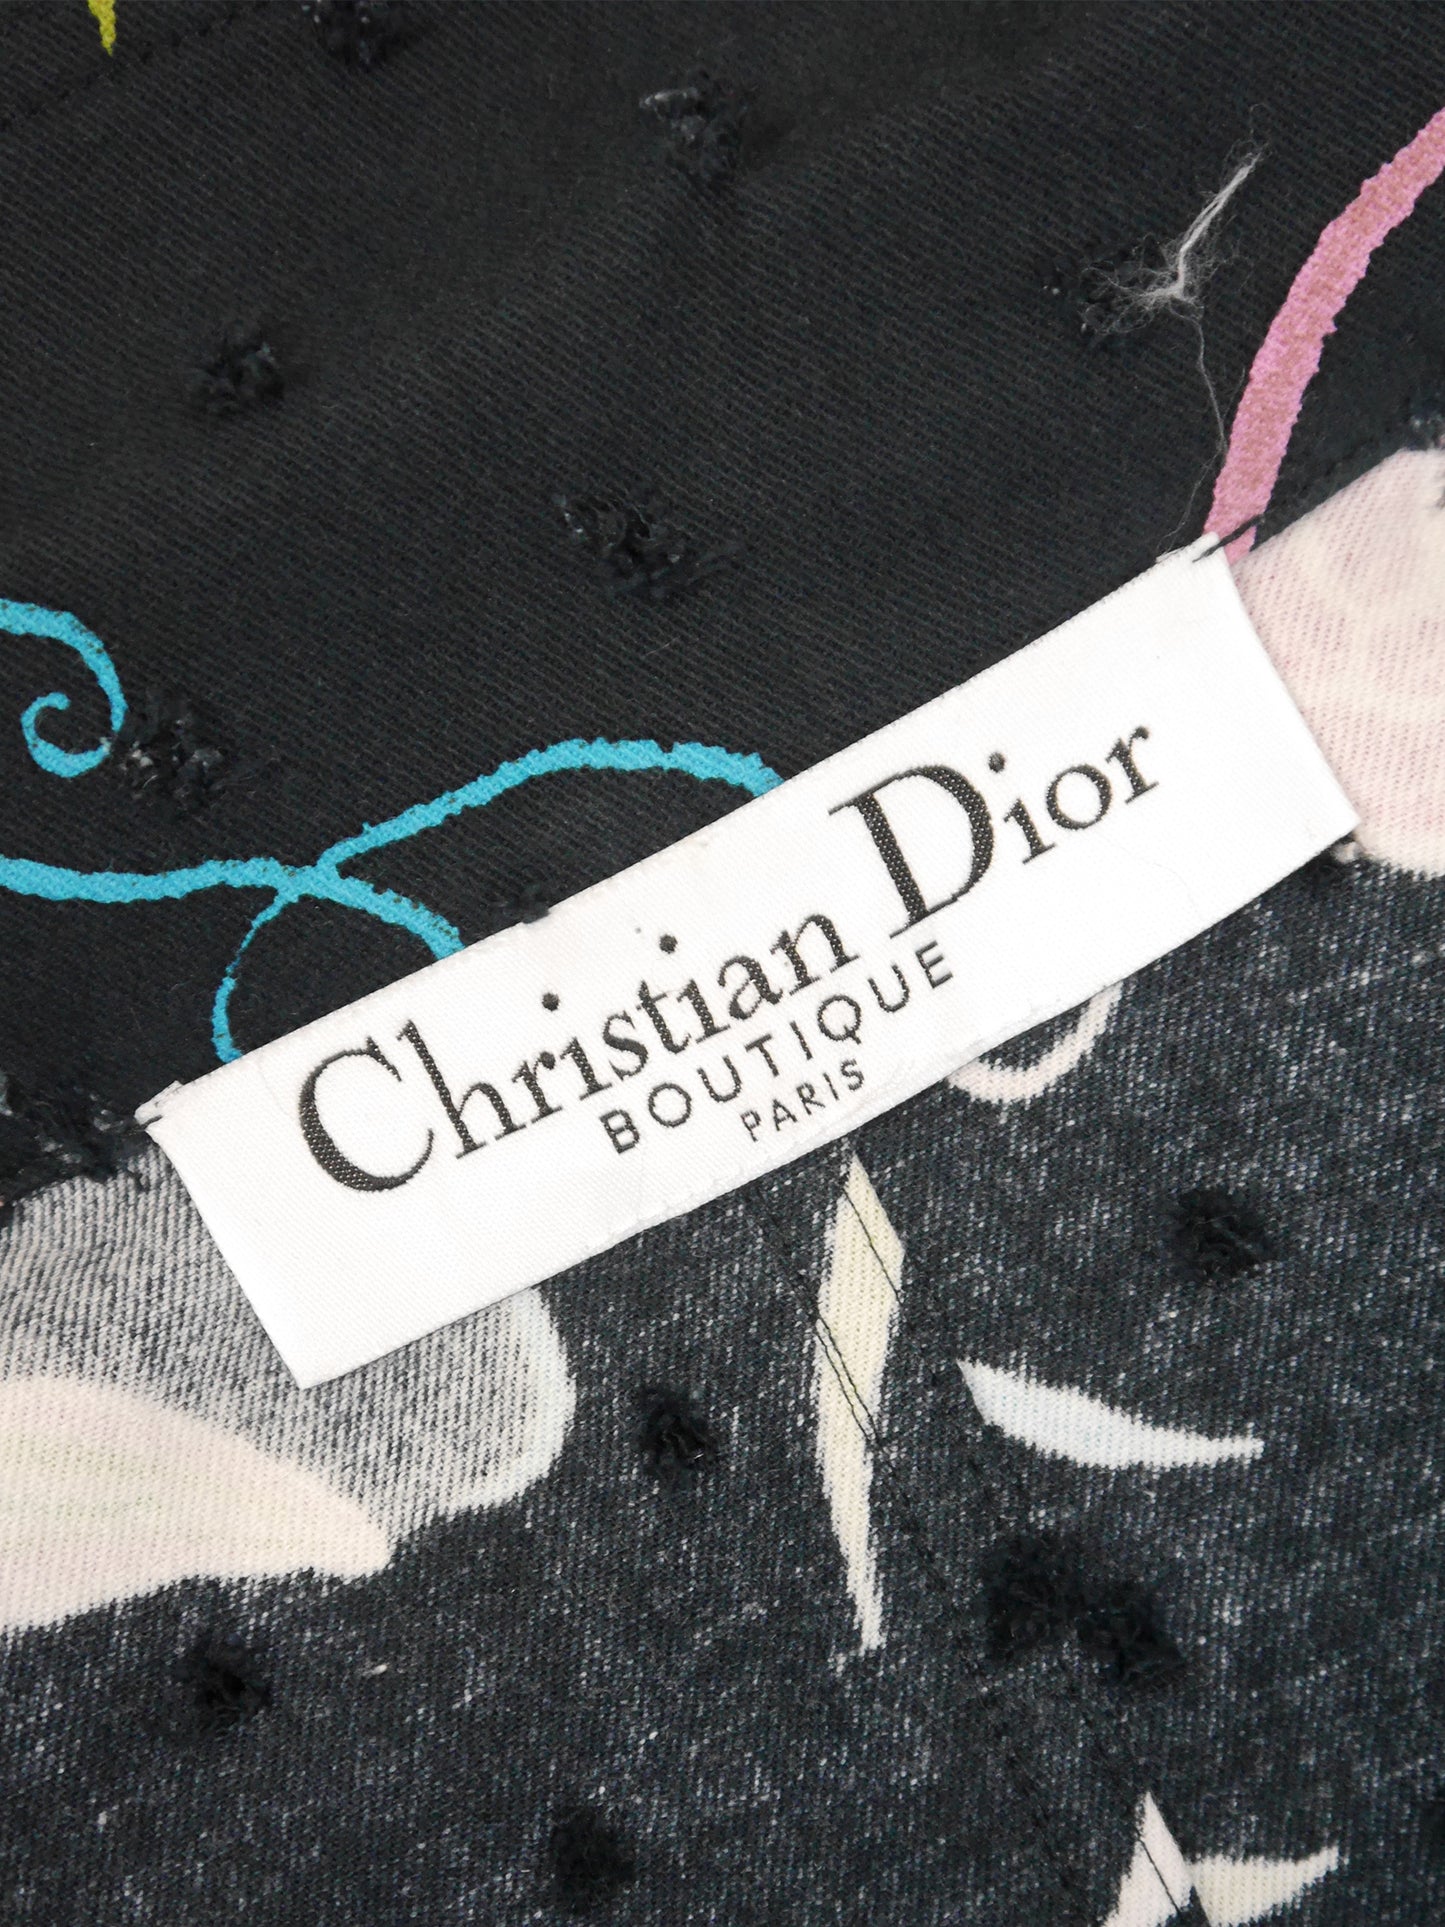 CHRISTIAN DIOR by John Galliano Spring 2004 Vintage Floral Denim Vest Size M